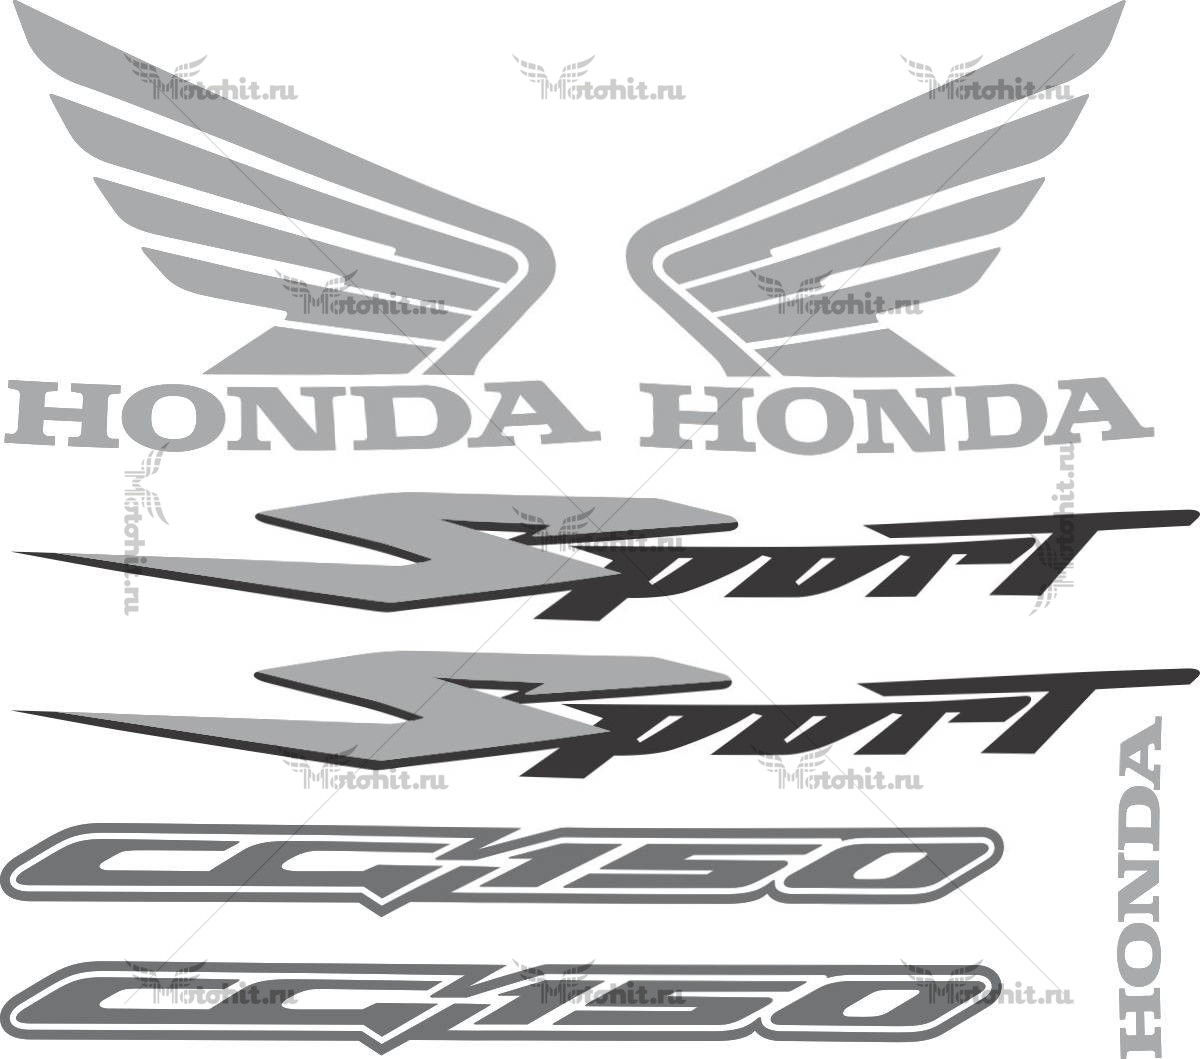 Комплект наклеек Honda CG-150 2006 TITAN-SPORT